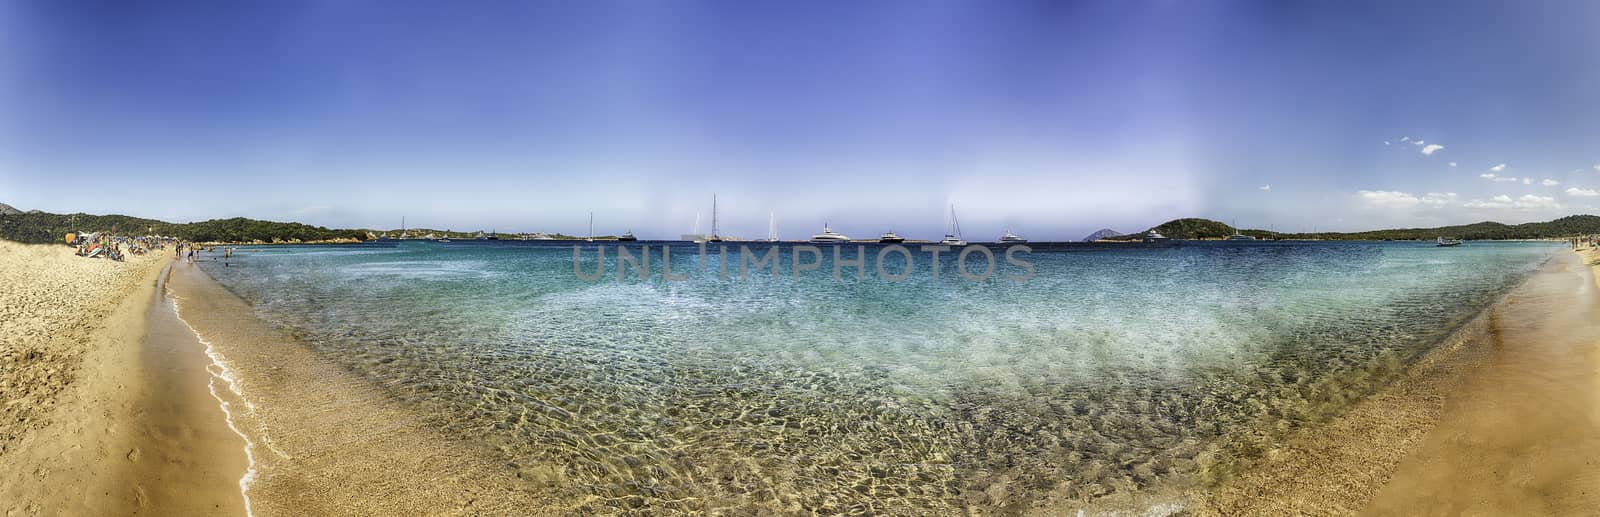 Panoramic view of Liscia Ruja beach, Sardinia, Italy by marcorubino